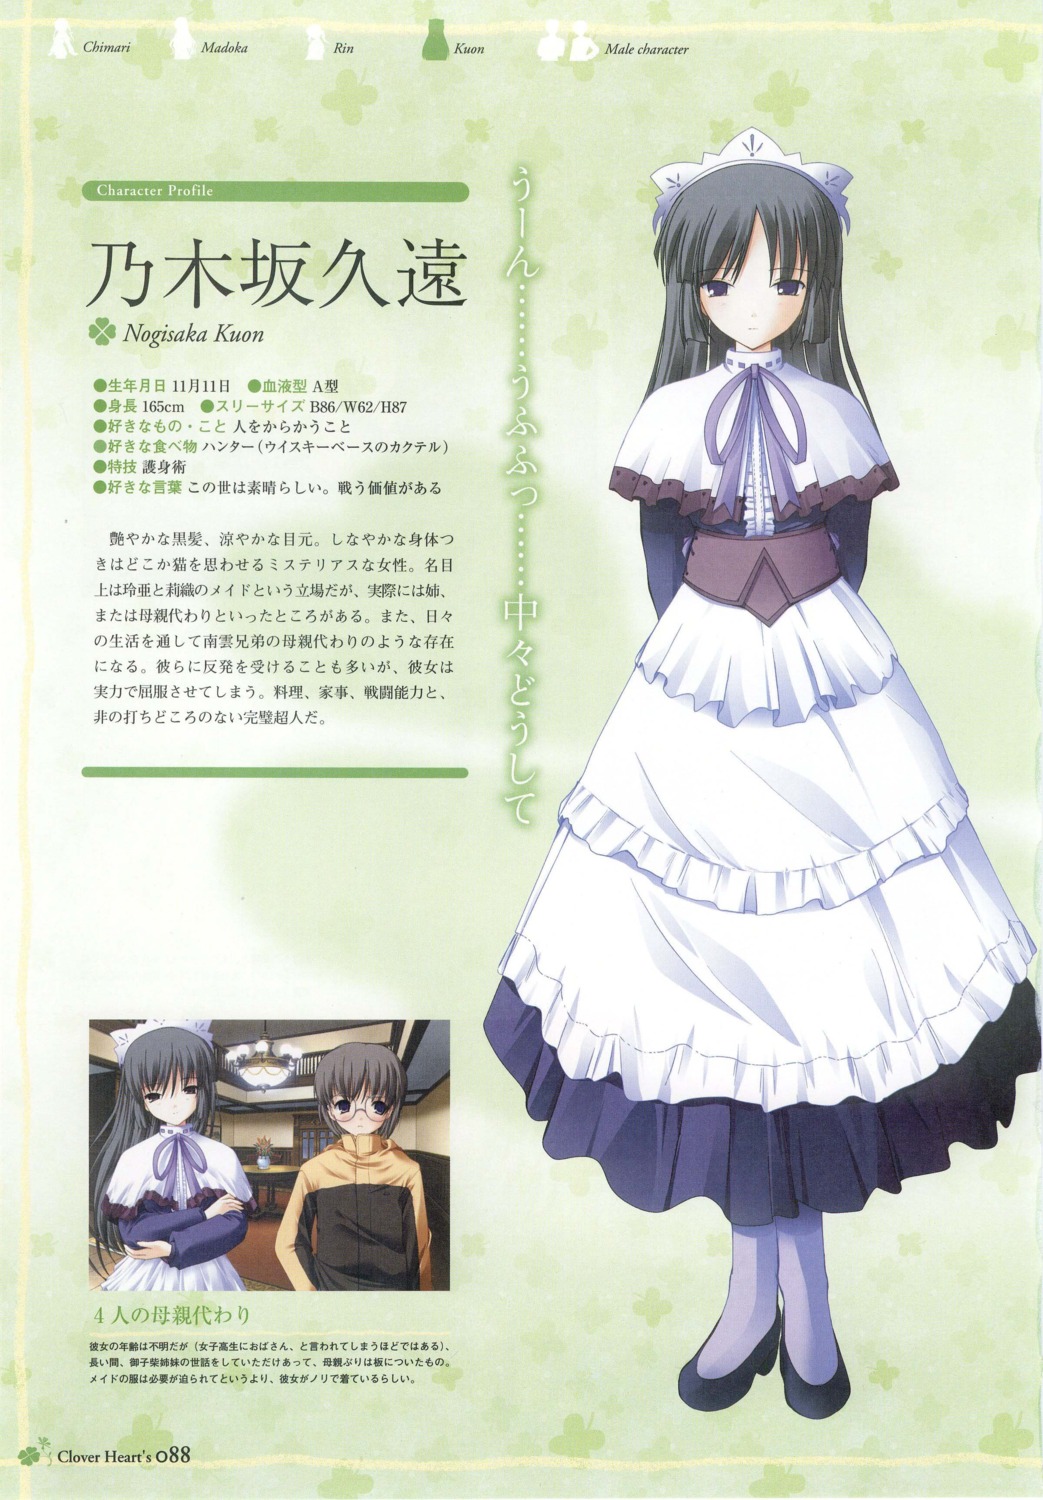 Nimura Yuuji Clover Hearts Nogisaka Kuon Maid Profile Page Screening Yande Re